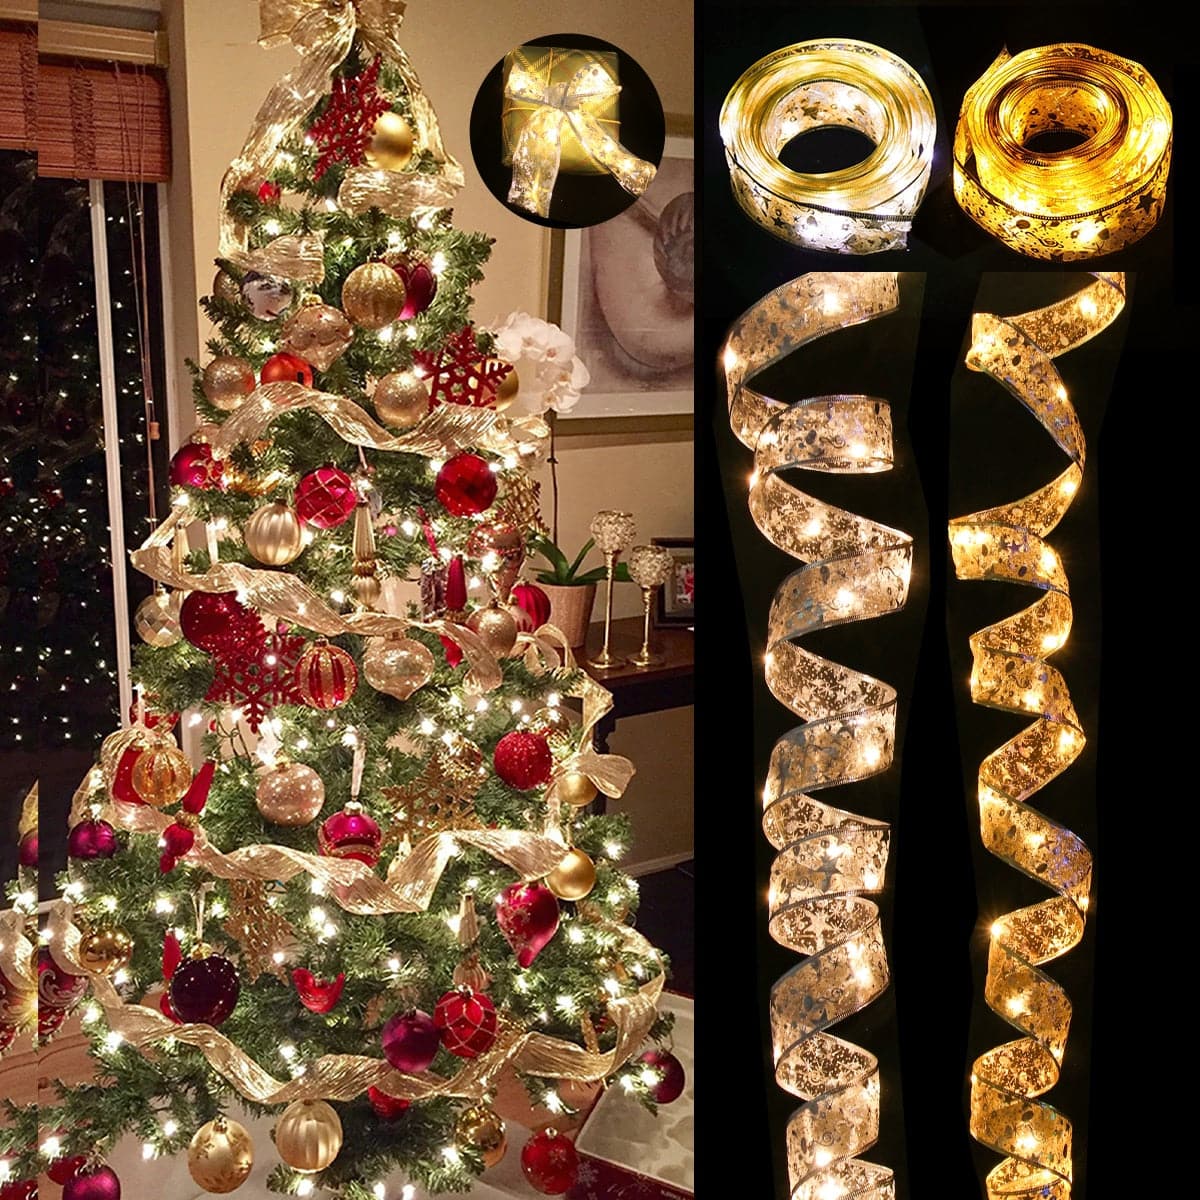 Ribbon Fairy Light Christmas Decoration Christmas Tree Ornaments For Home